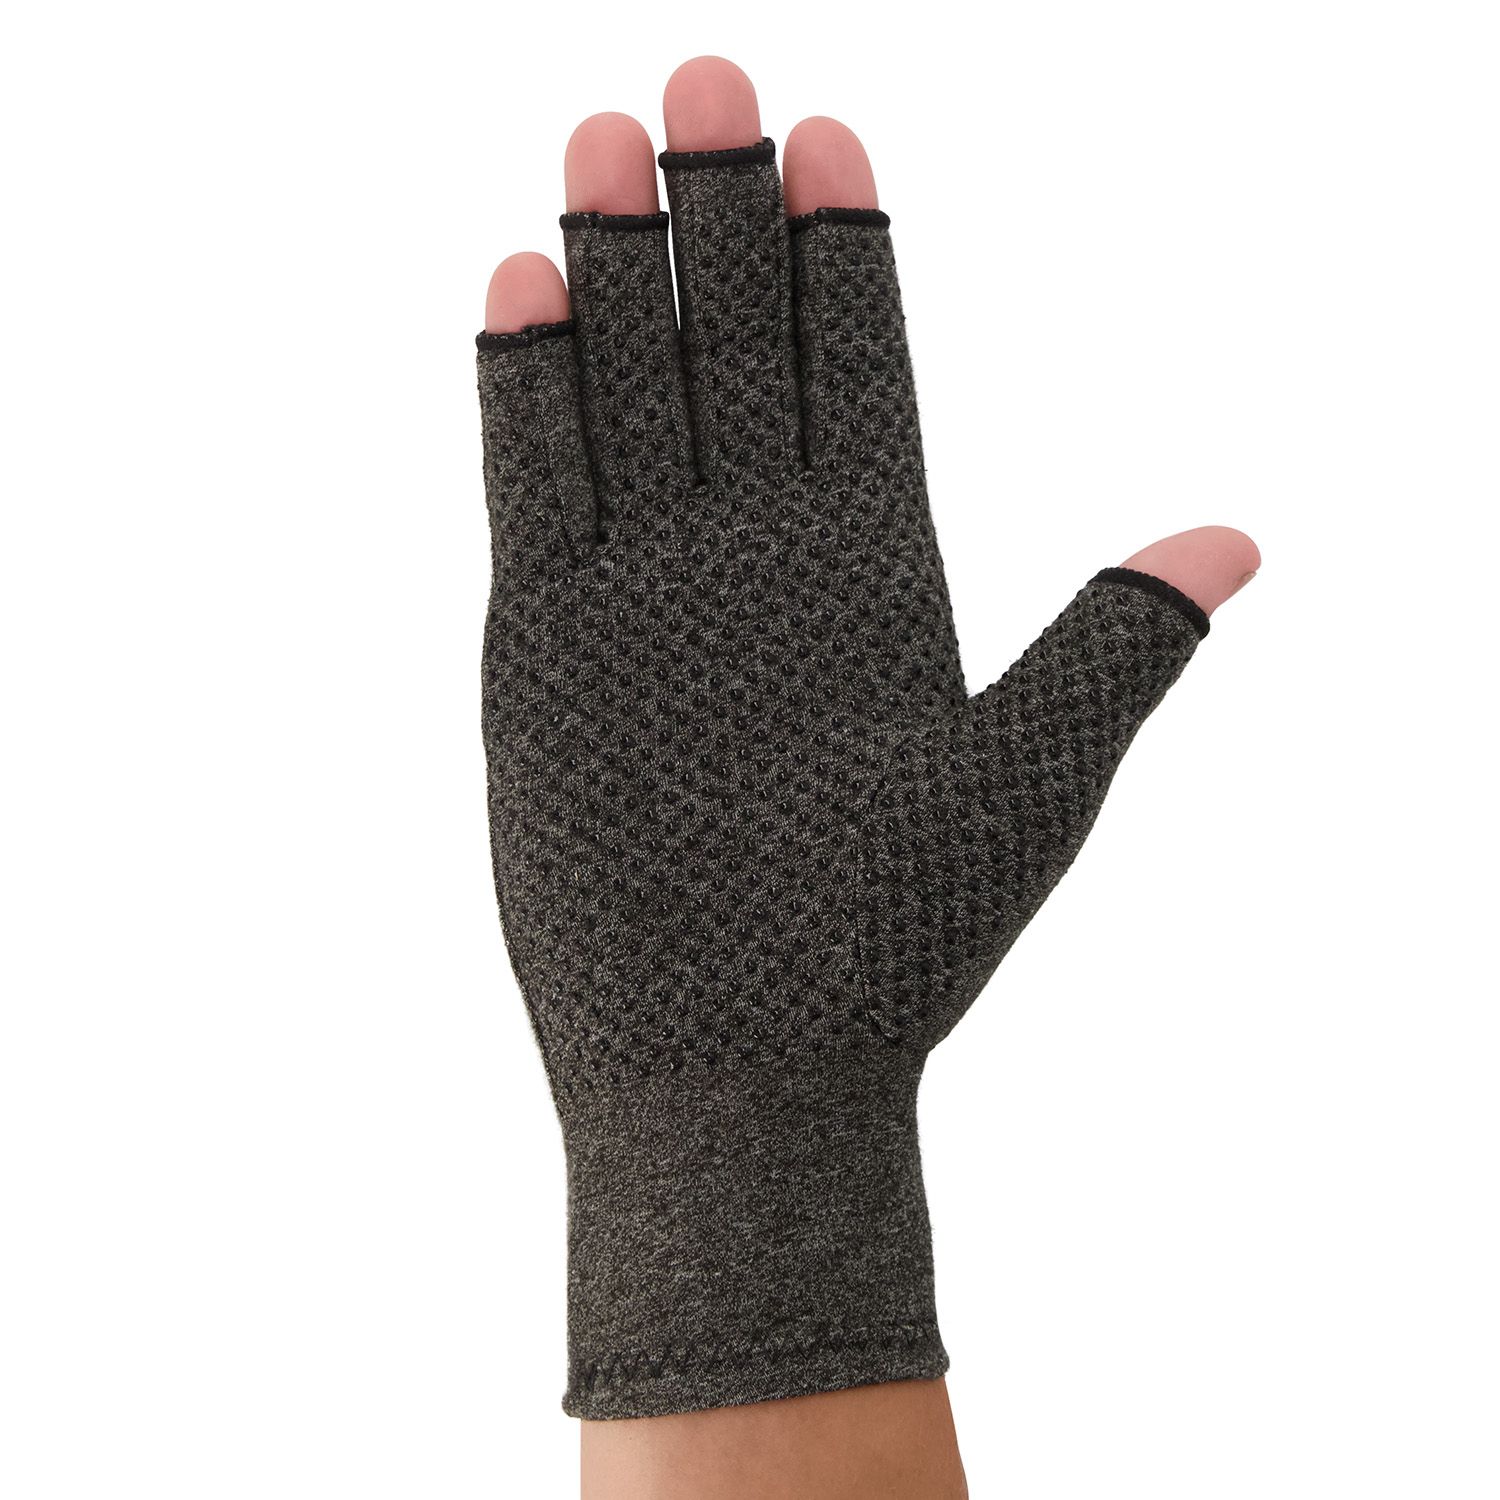 medidu rheumatoid arthritis osteoarthritis gloves with anti-slip layer in skin zoomed in